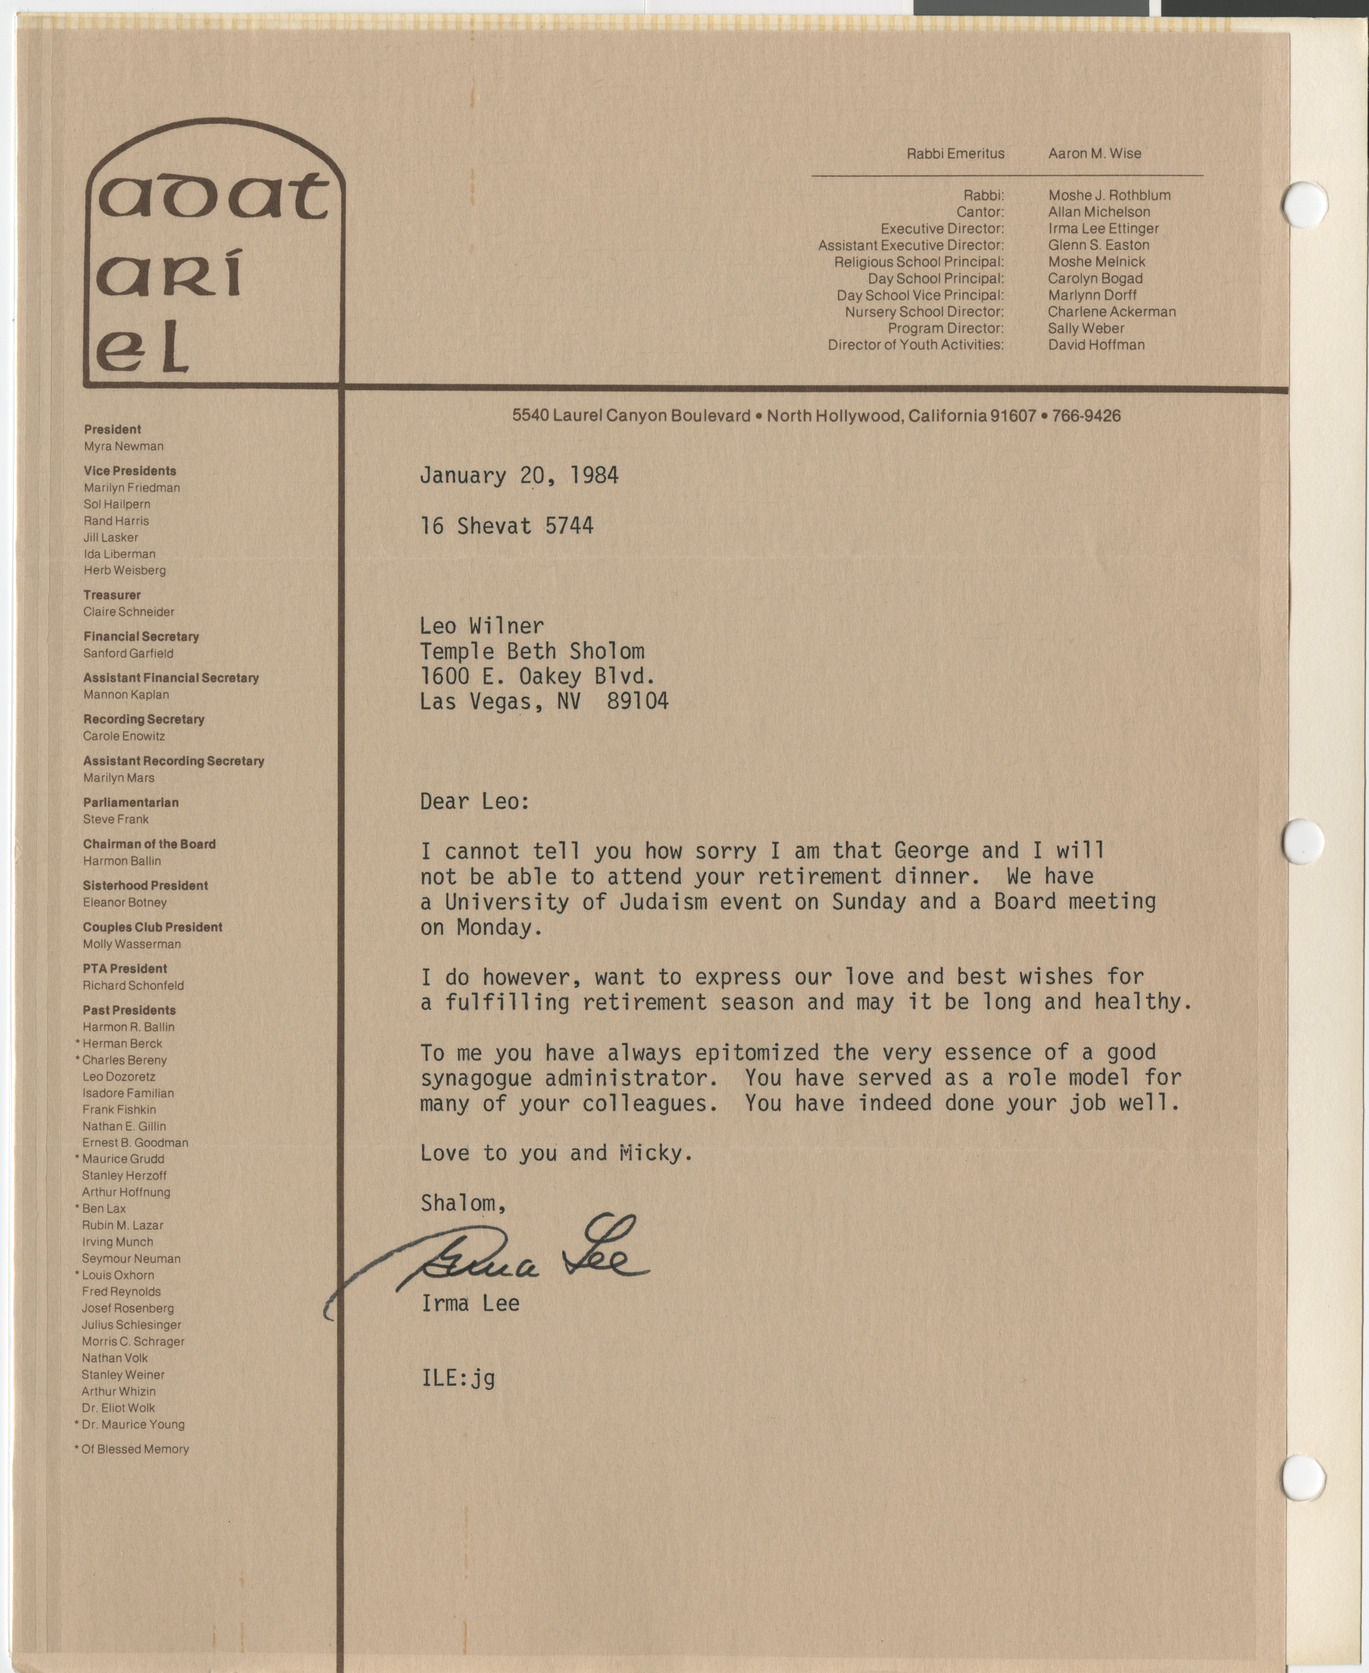 Letter from Irma Lee (Adat Ari El, North Hollywood, Calif.) to Leo Wilner, January 20, 1984